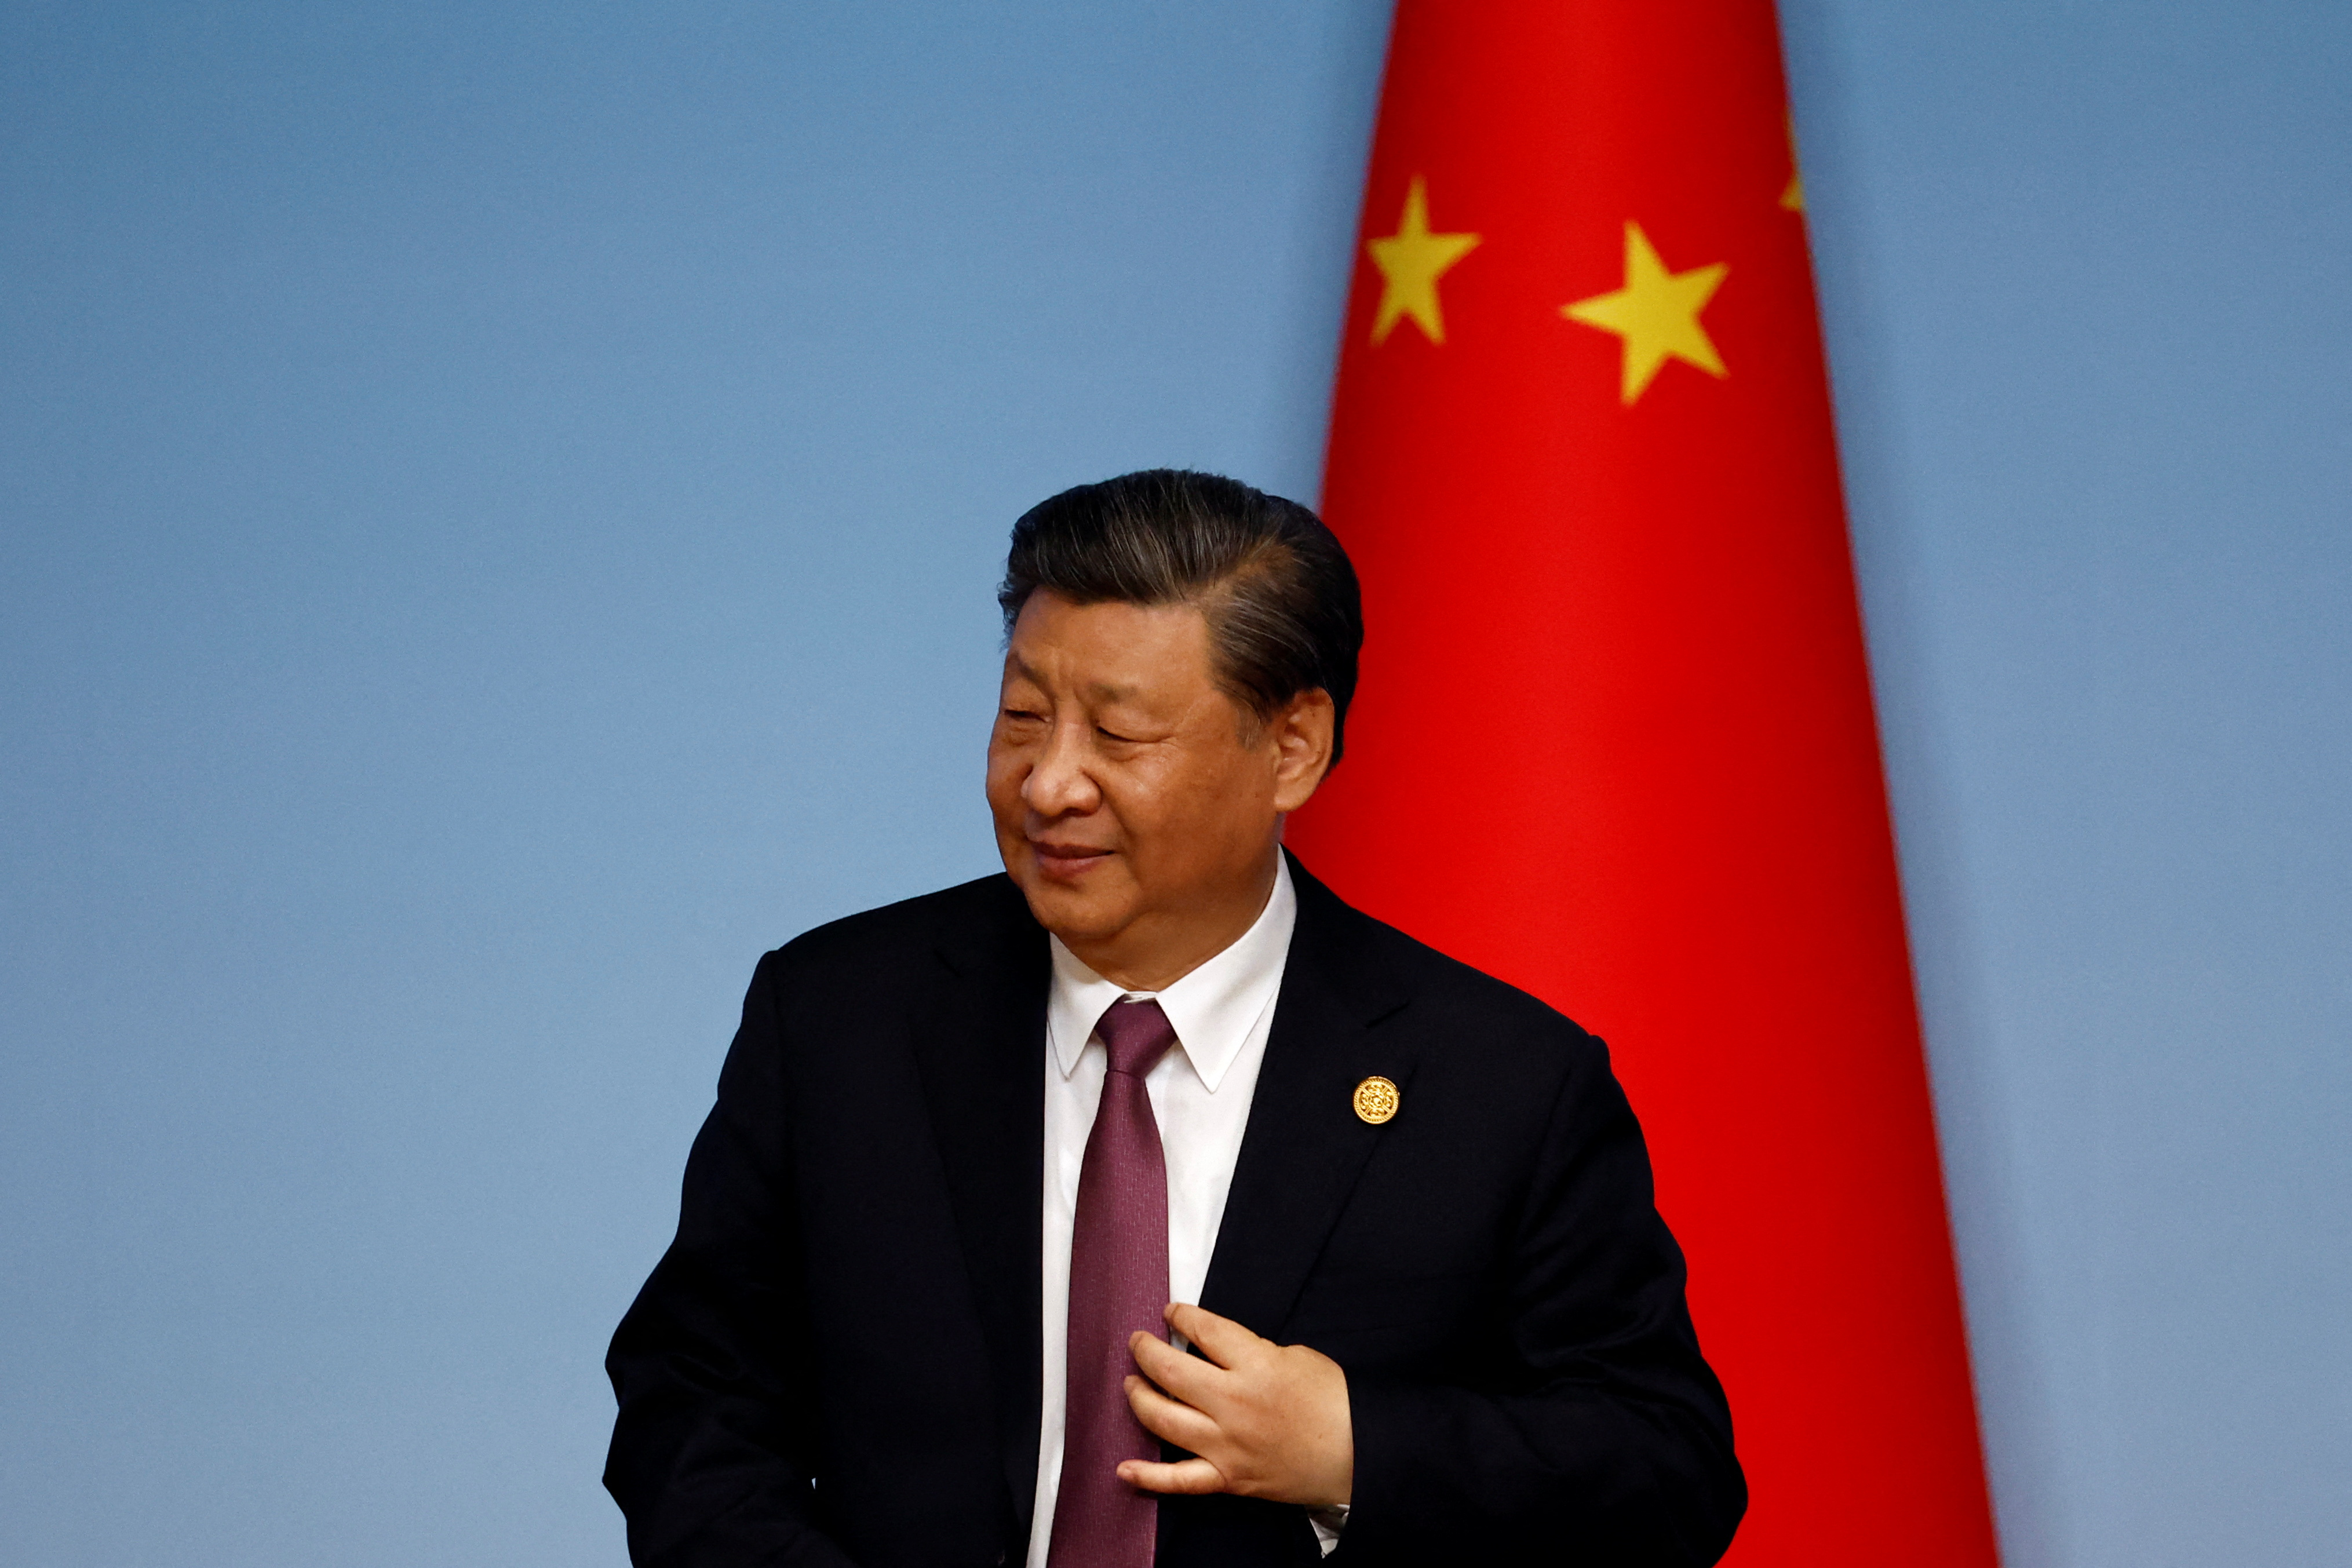 El presidente chino, Xi Jinping, se va al final de la conferencia de prensa conjunta para la Cumbre China-Asia Central en Xian, provincia de Shaanxi, China. REUTERS/Florence Lo/Pool